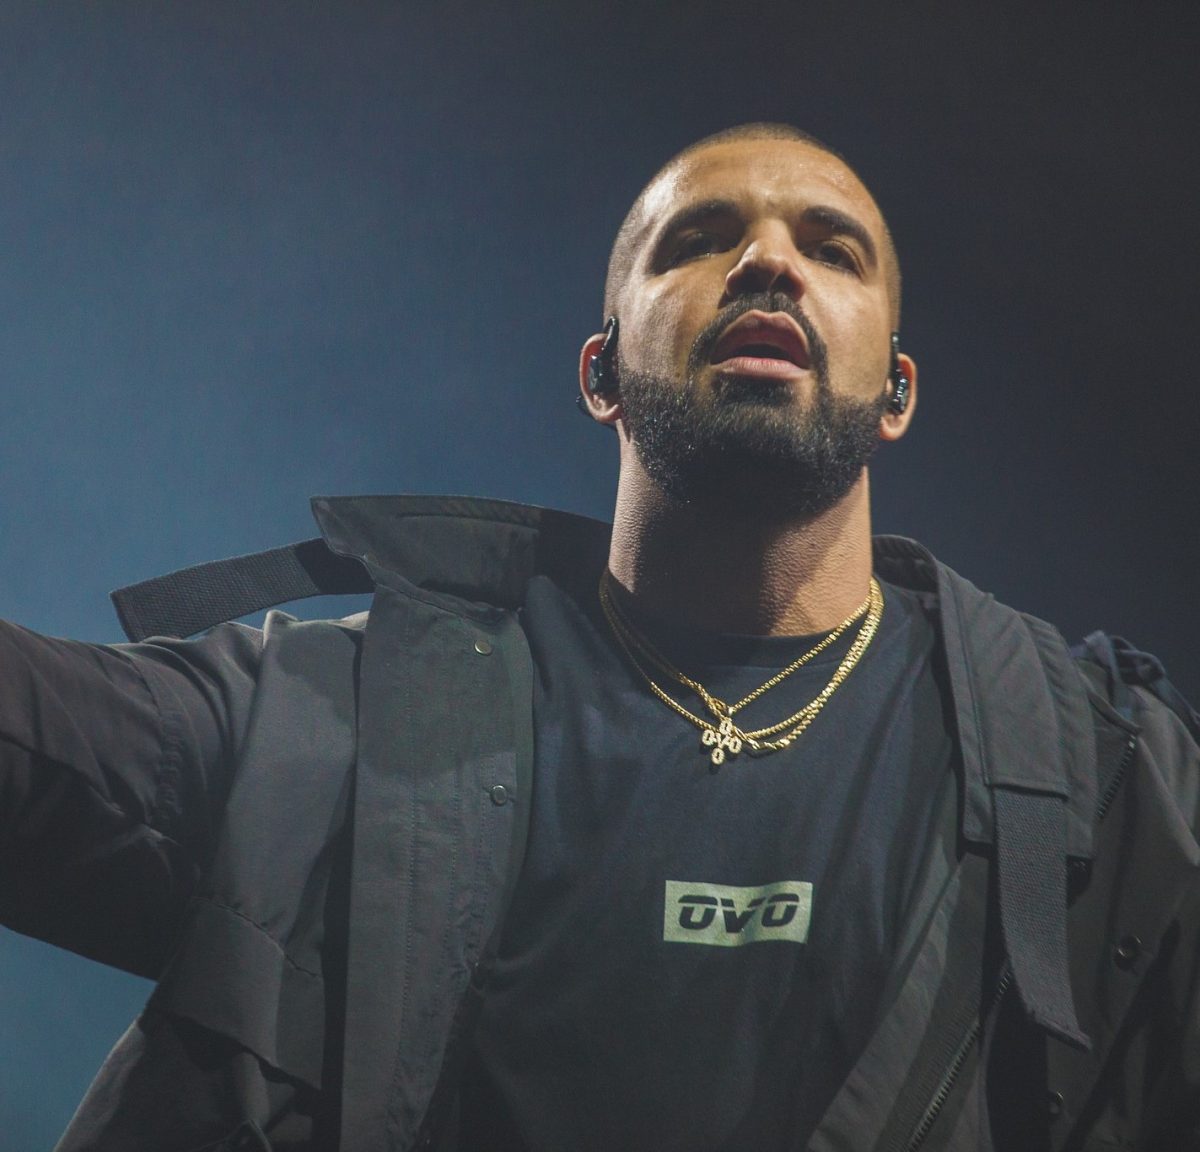 Drake performs during the Summer Sixteen Tour 2016 in Toronto.